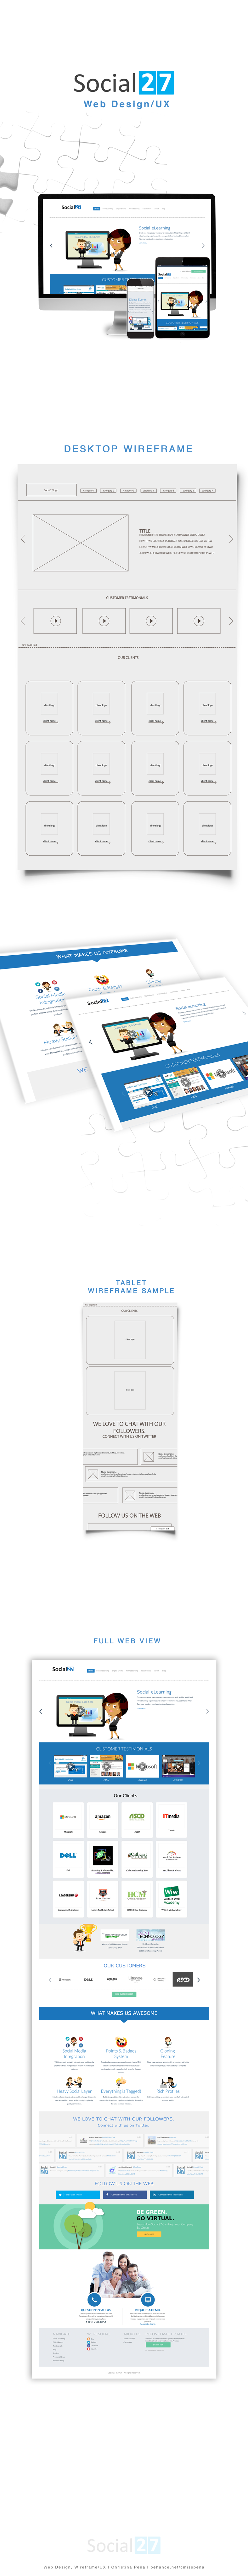 wireframe ux Responsive Design HTML mobile Web